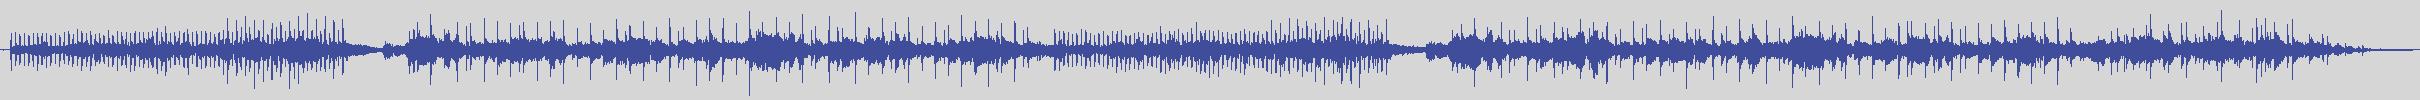 digiphonic_records [DPR004] Nino D'Angelo - Voglia e Fa Pace Cu Te [Original Mix] audio wave form